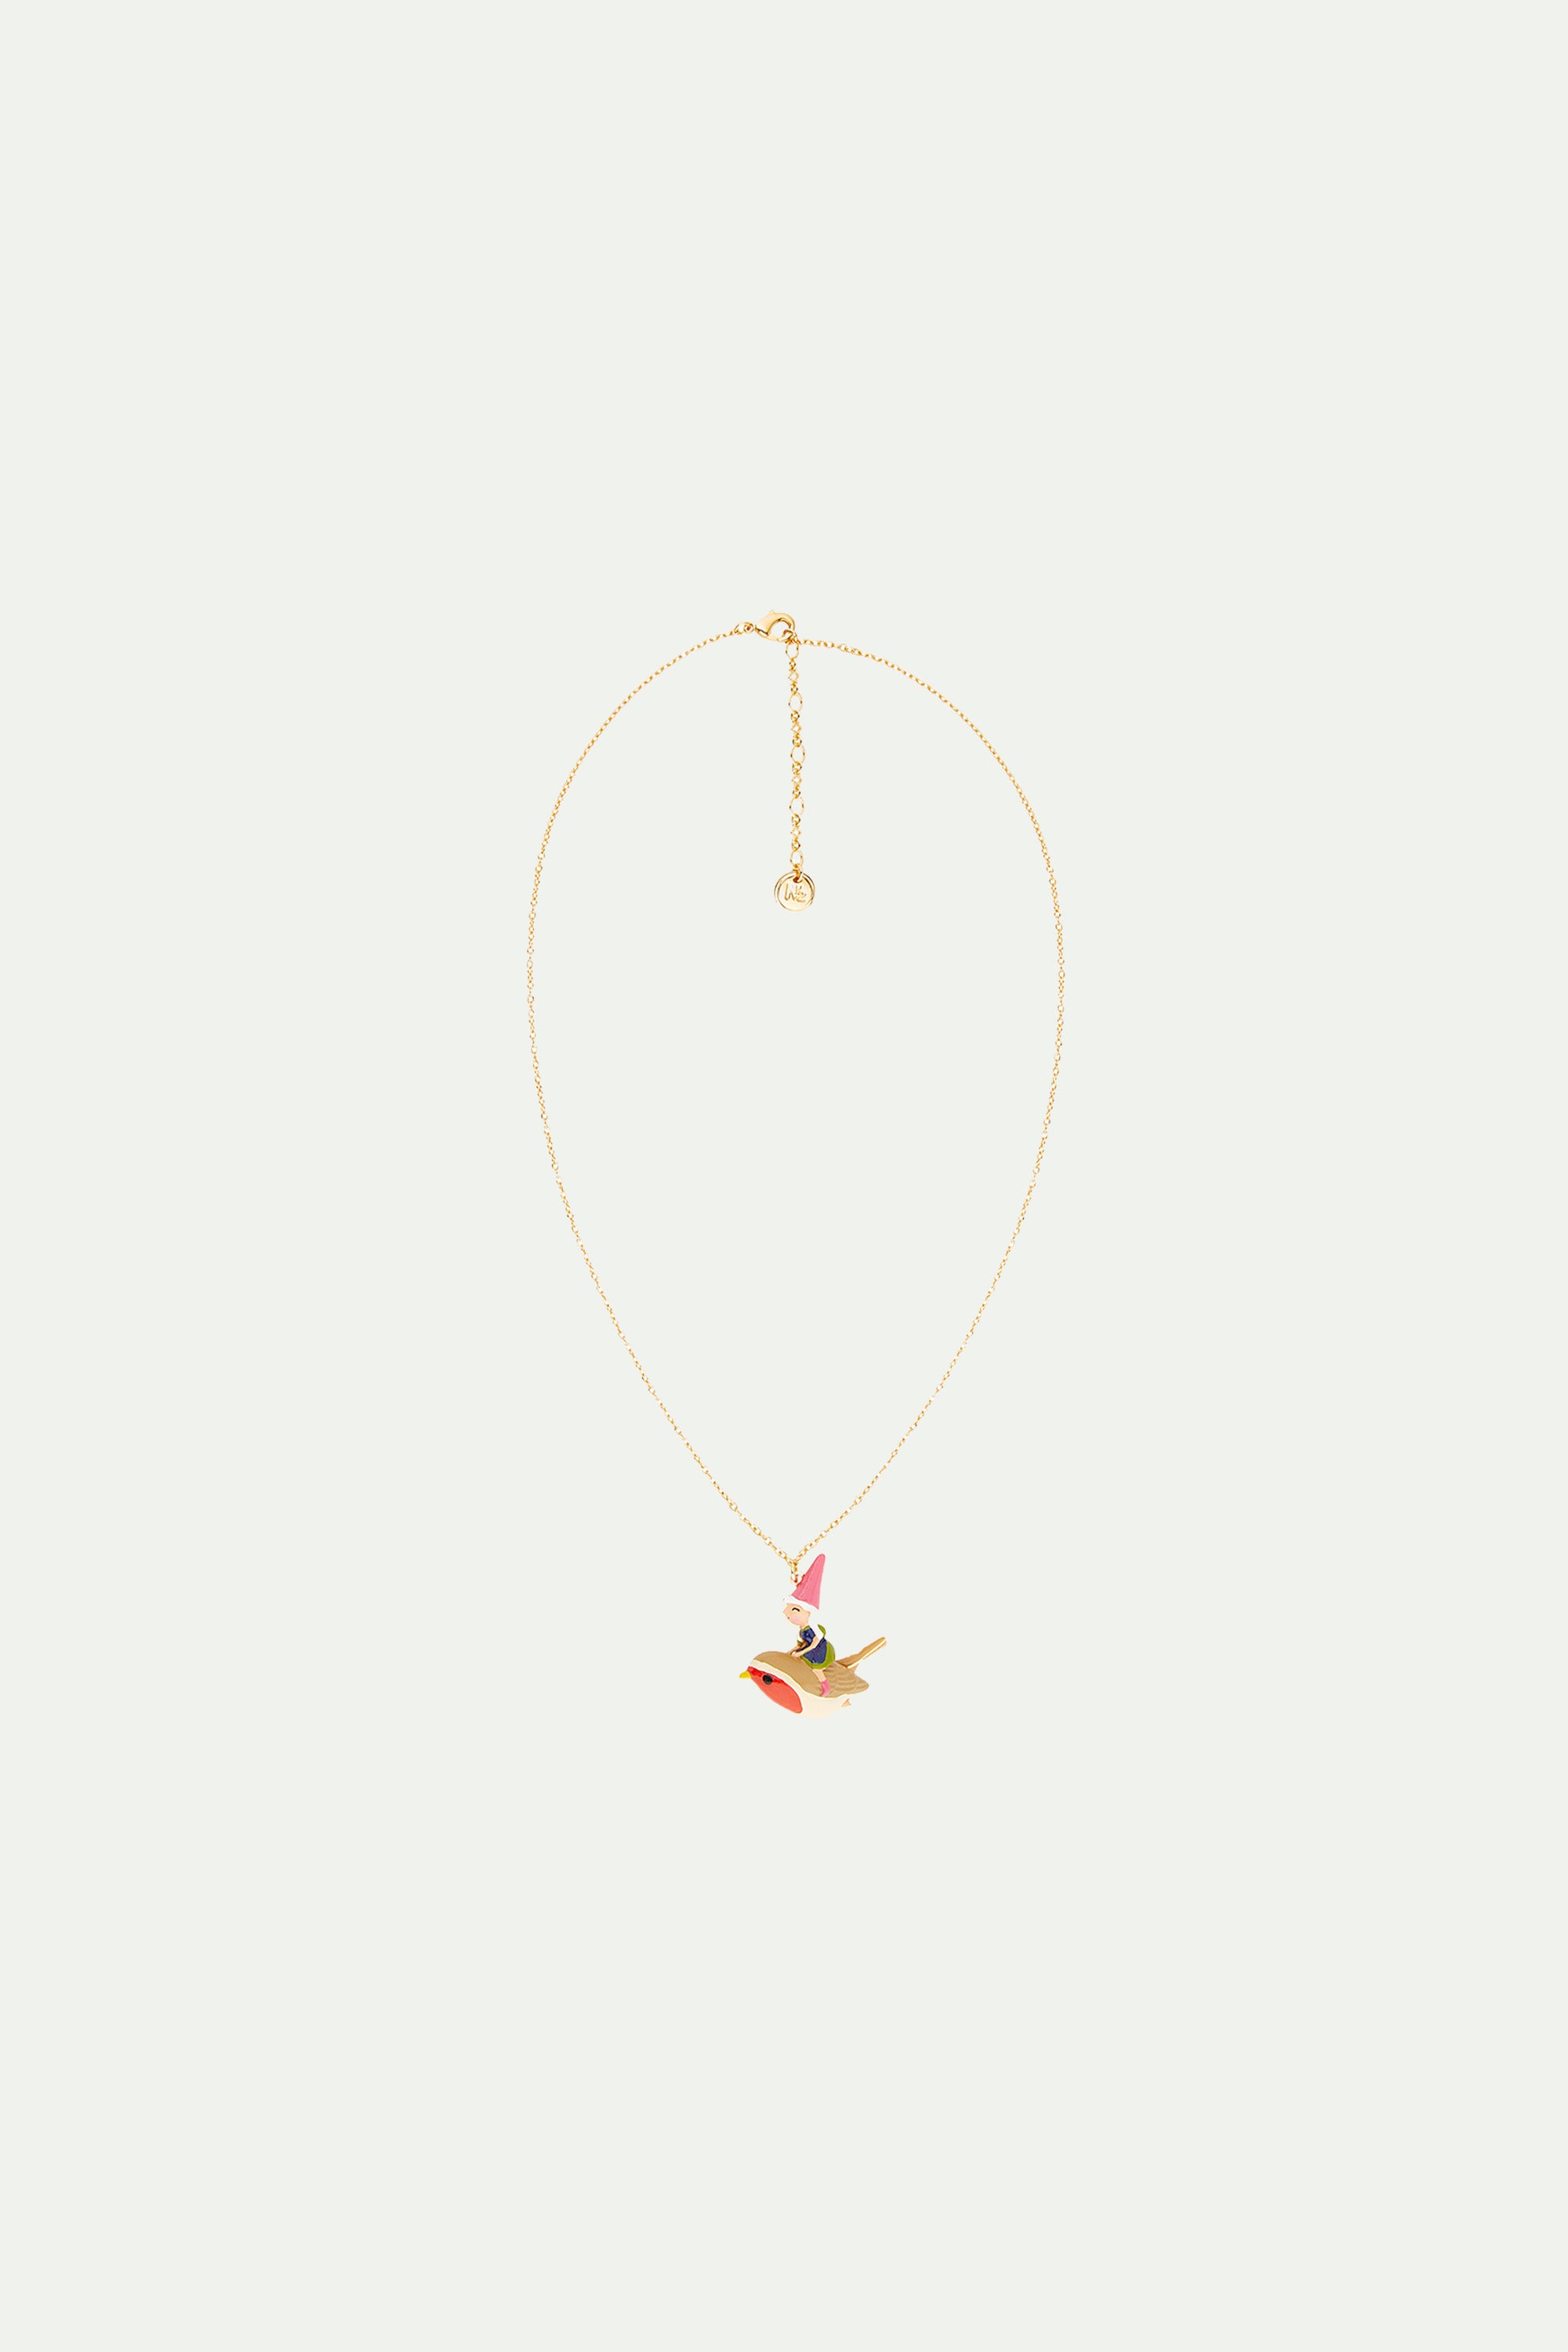 Garden gnome lady and bird riding pendant necklace